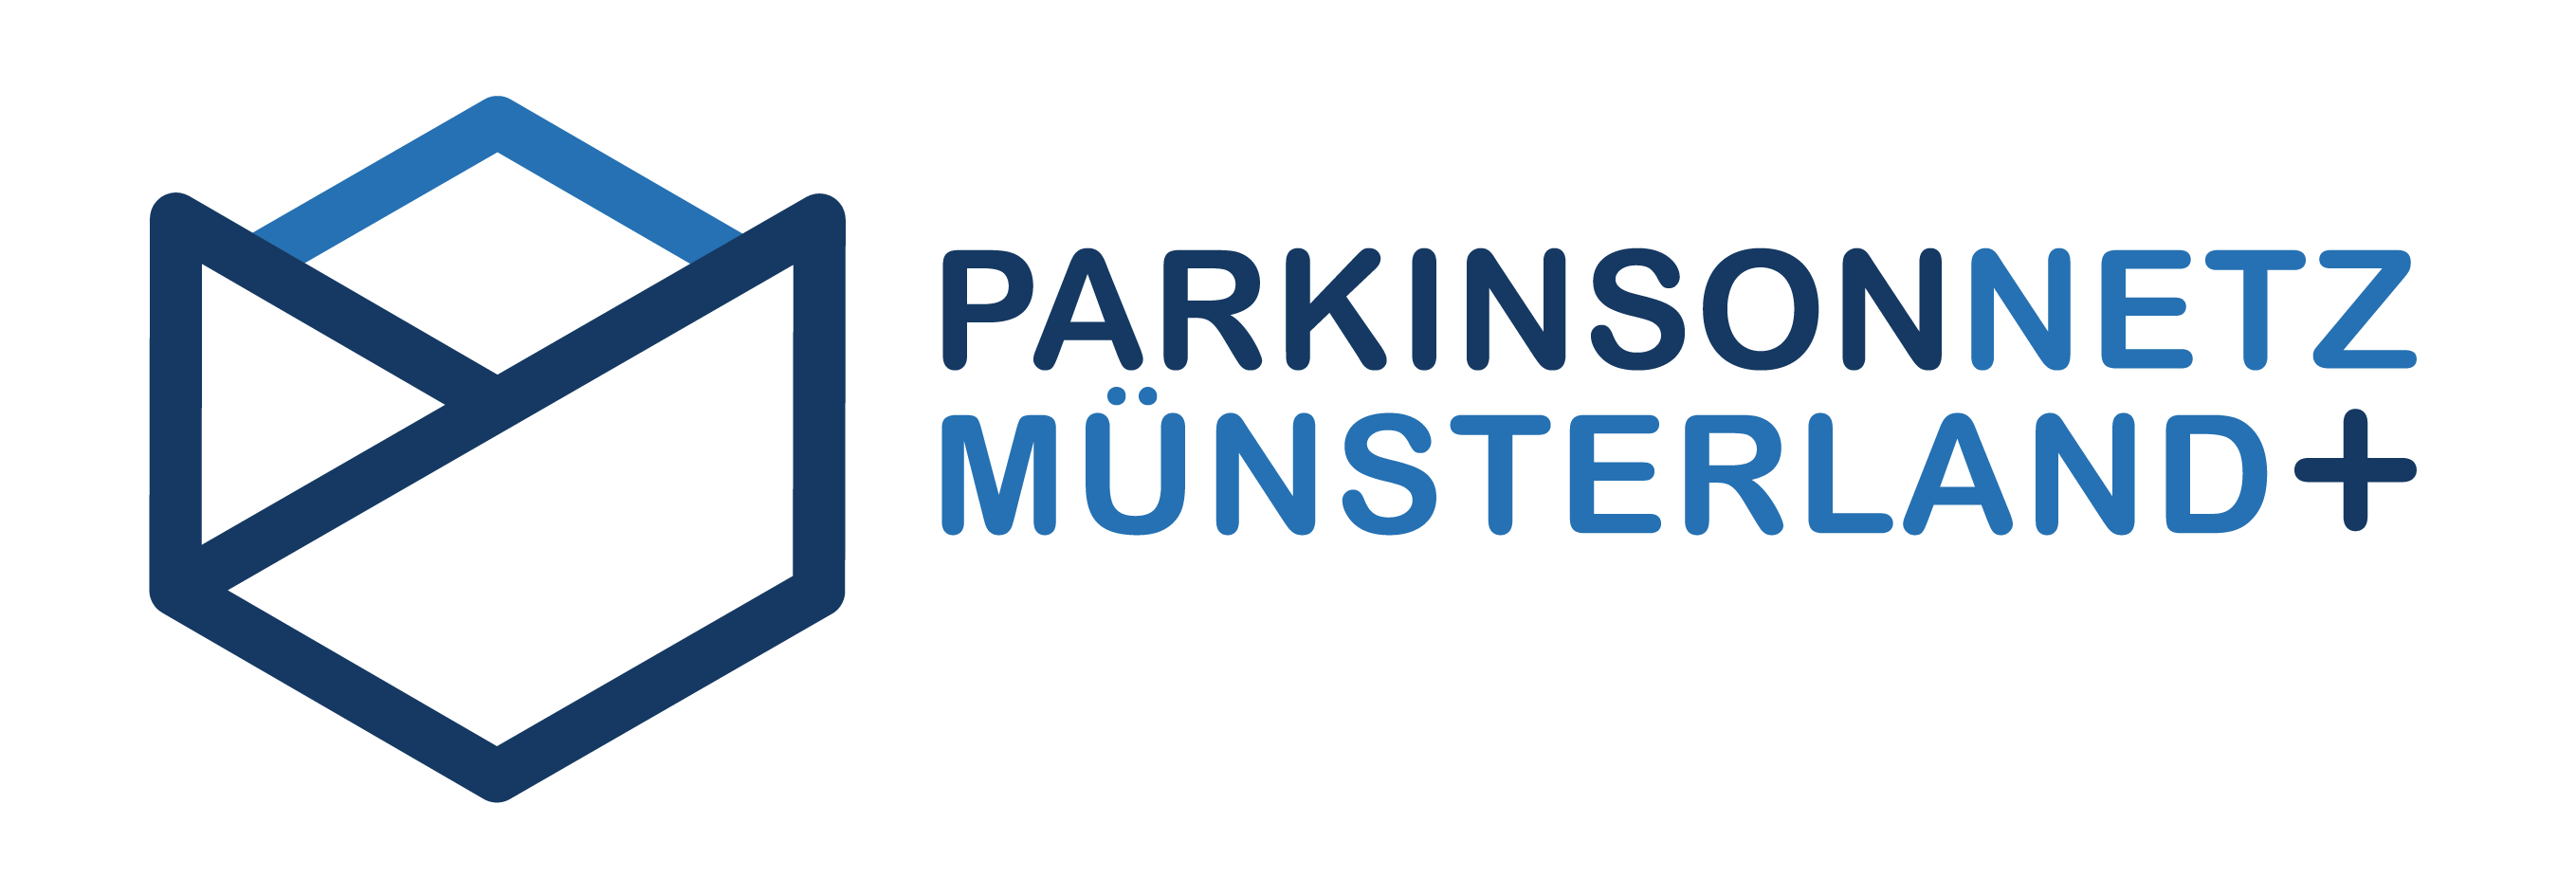 Abbvie_Logo_Parkinsonnetz-Muensterland-Plus_RGB_blueblue